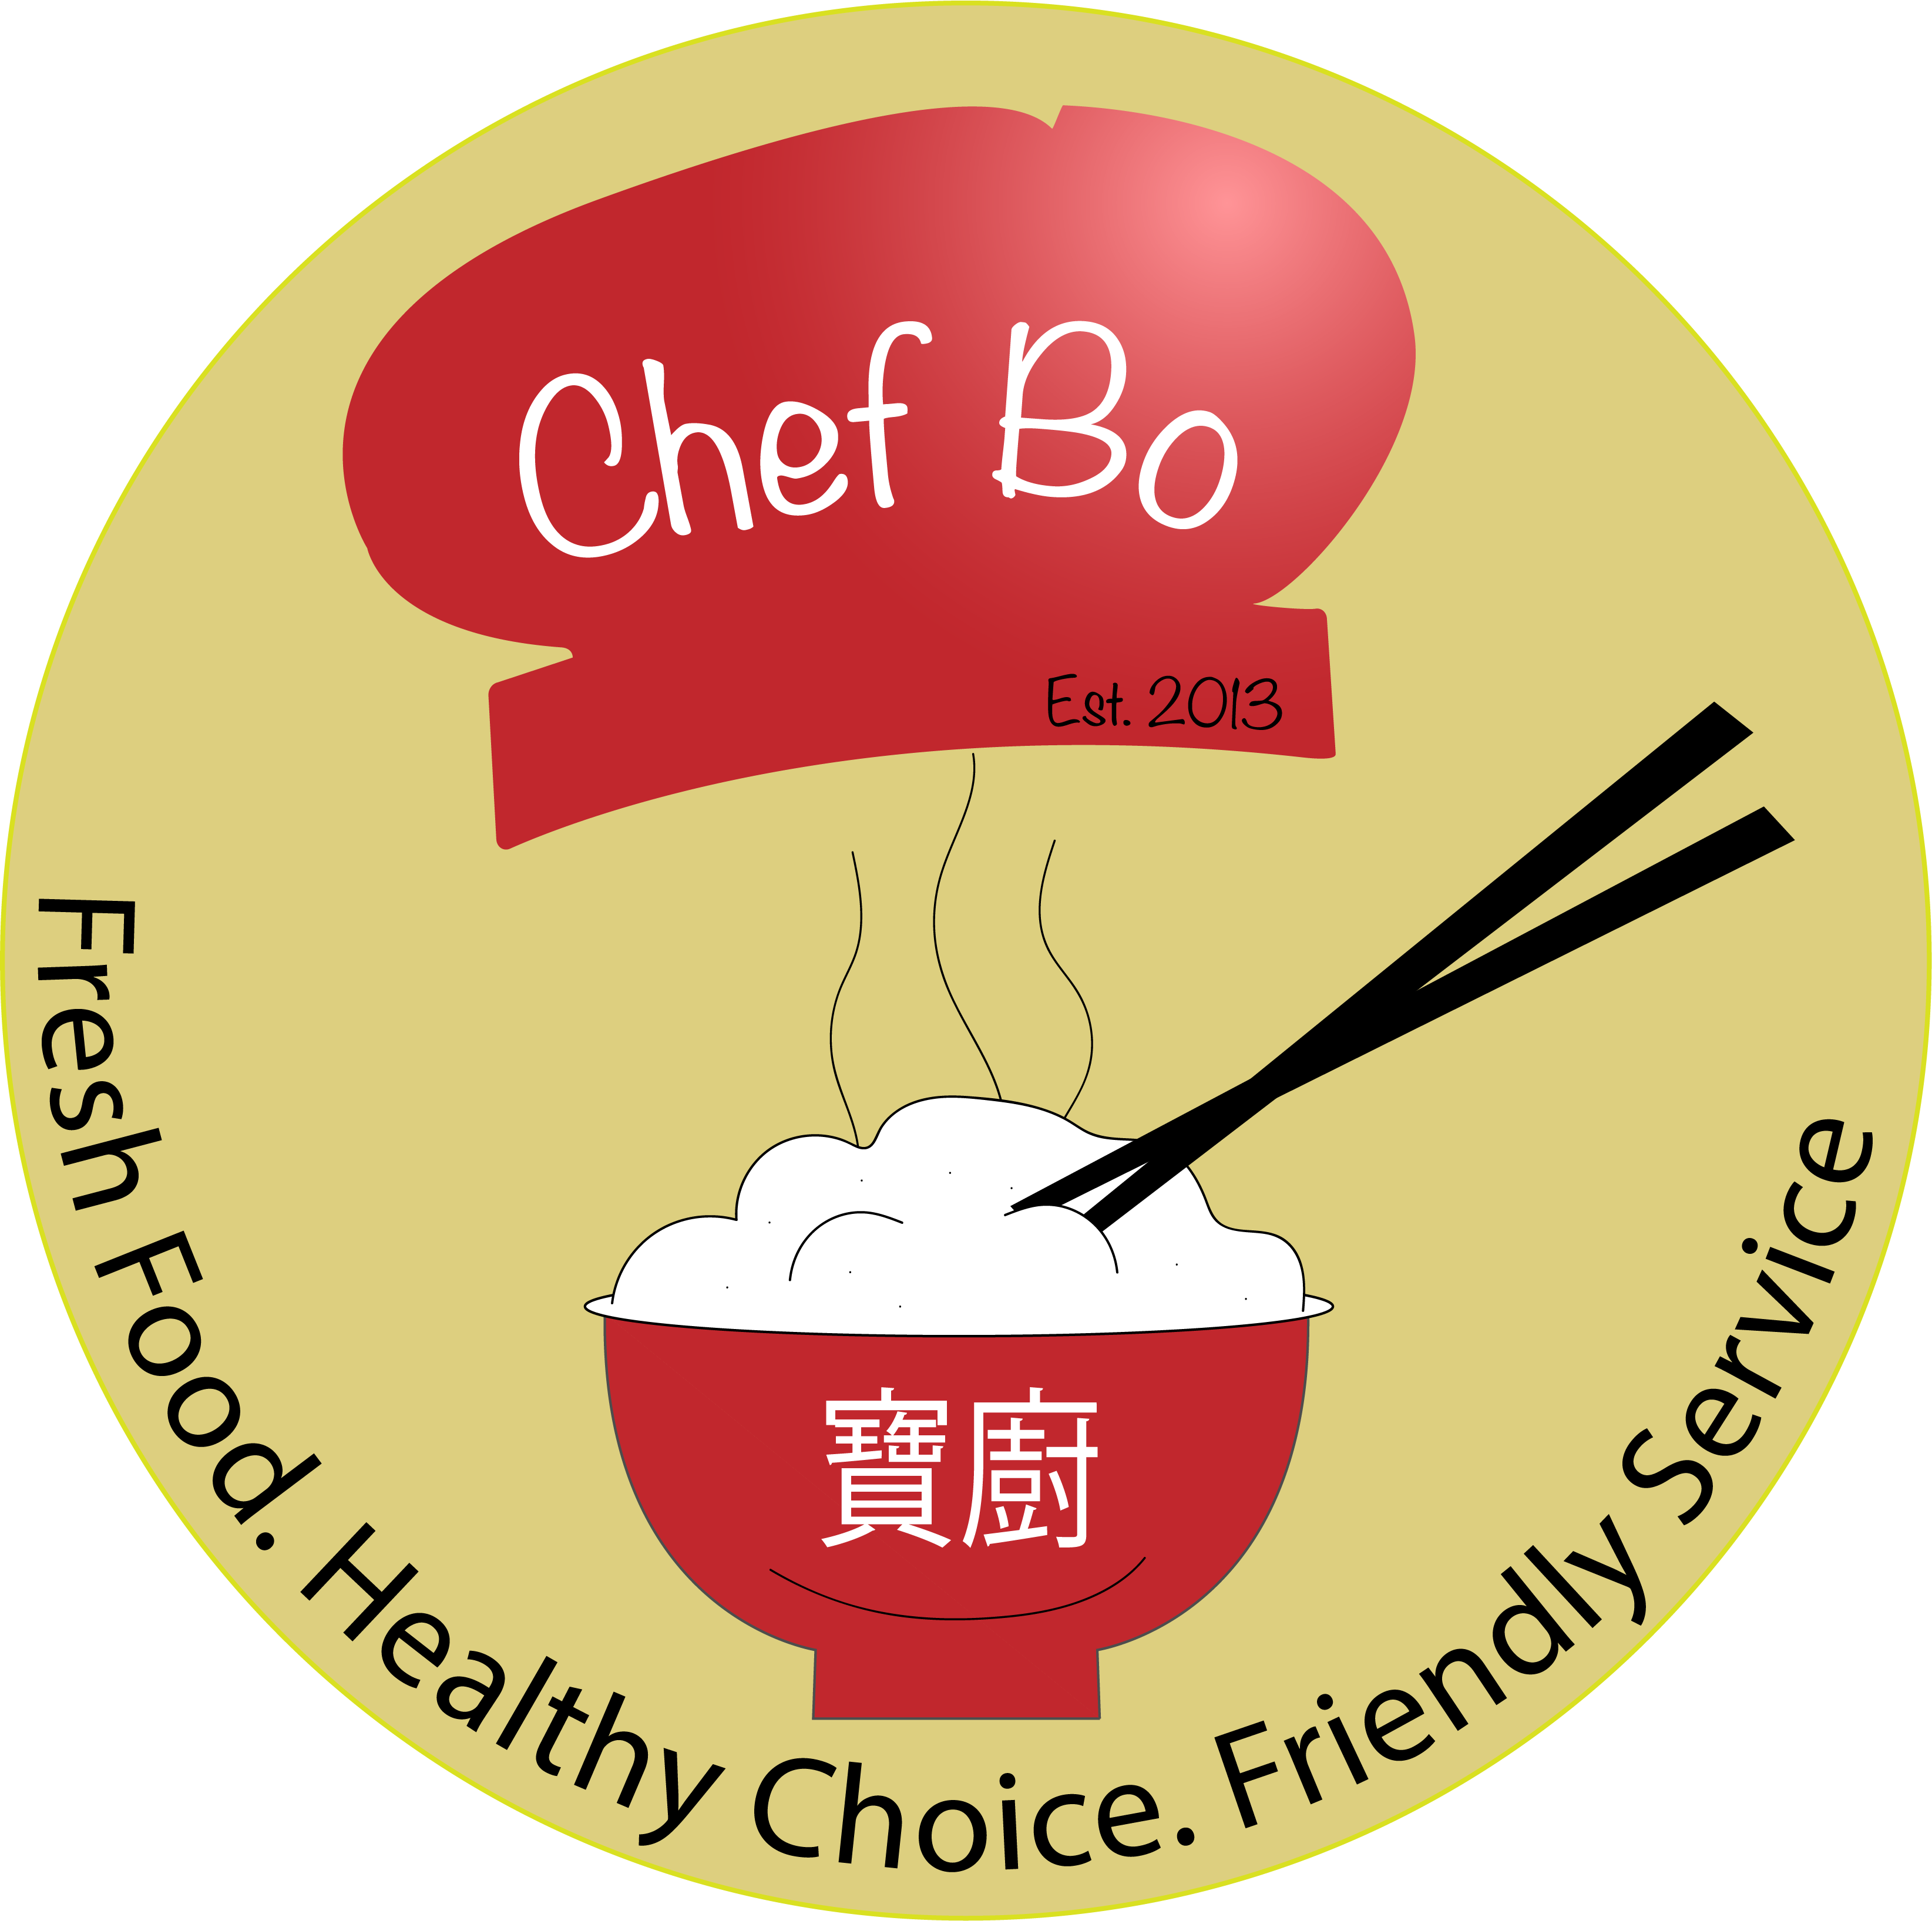 chefbo-logo